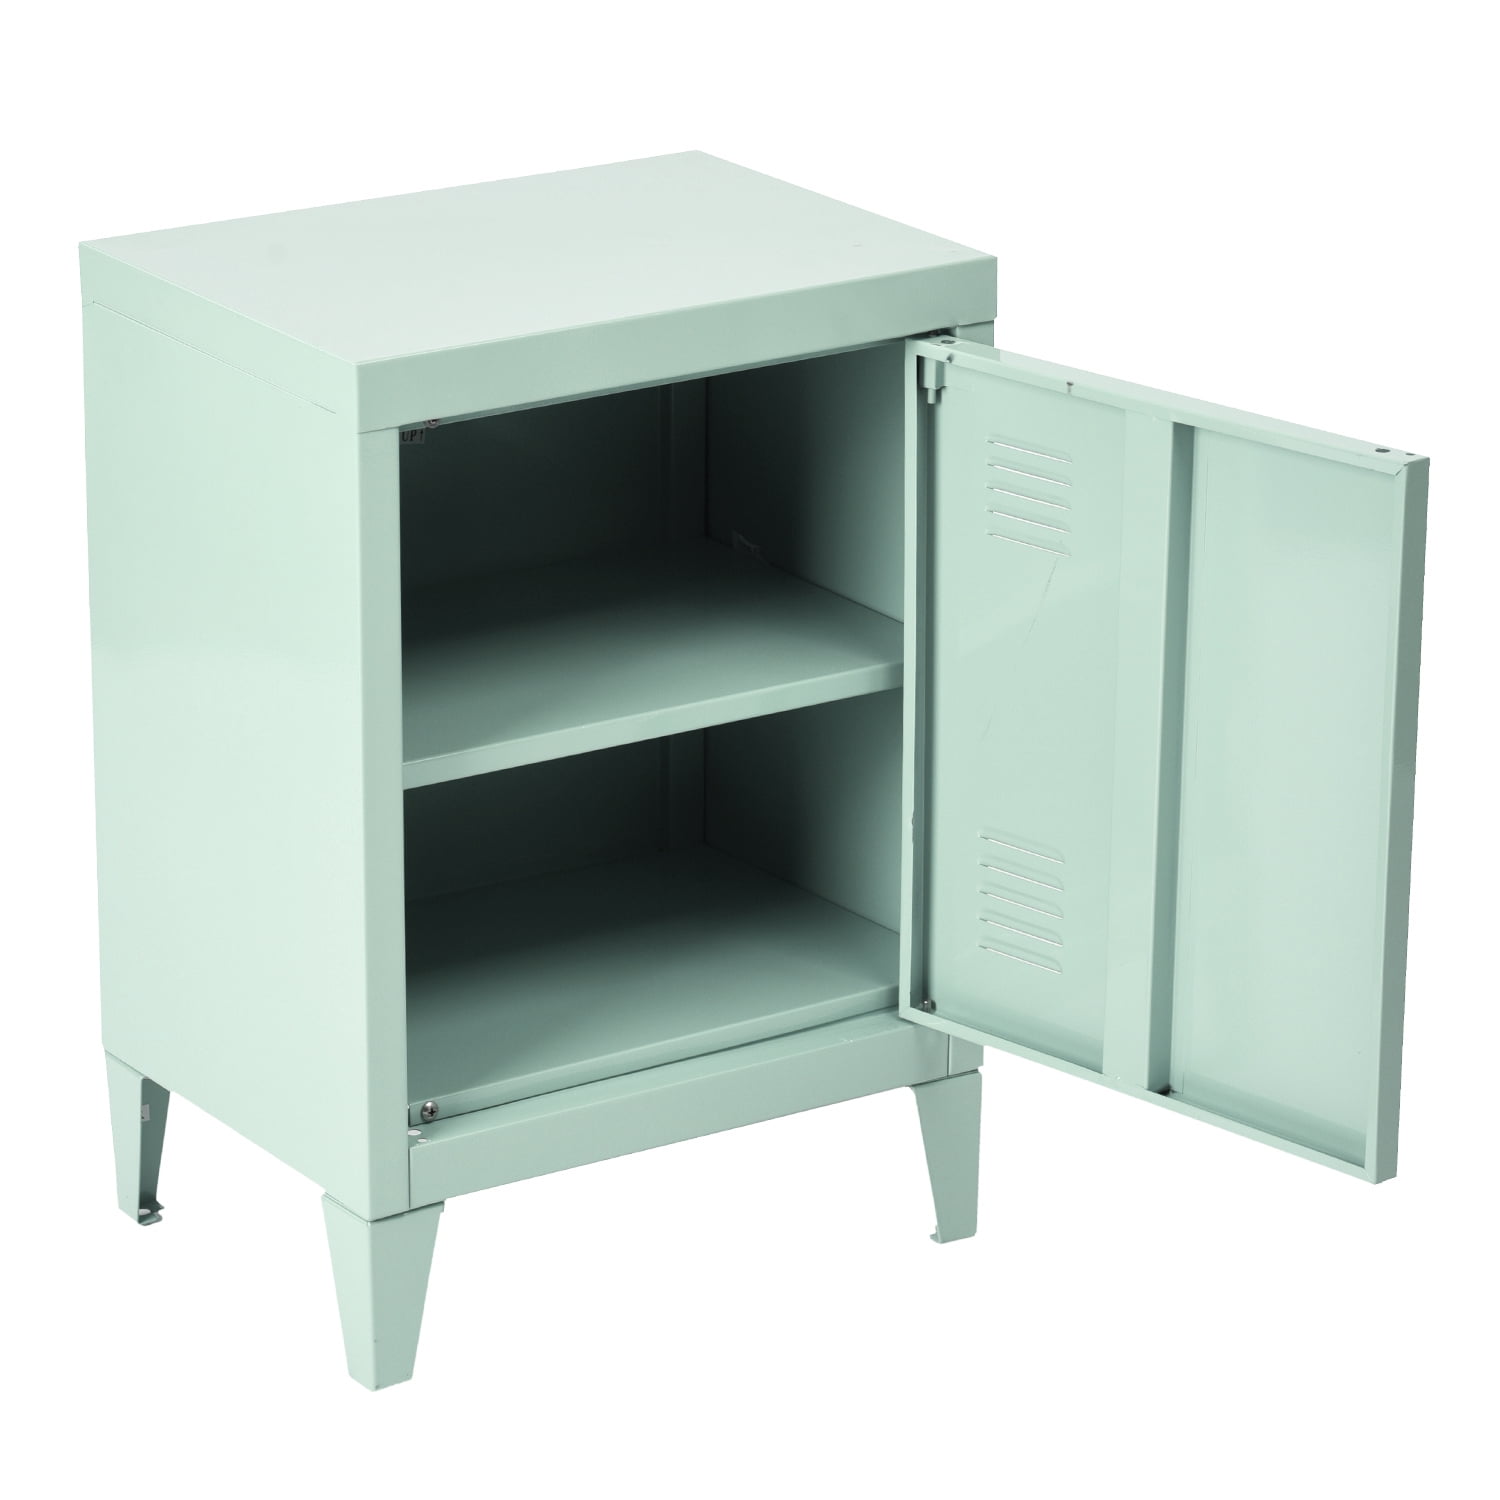 FurnitureR Metal Side End Table Office Low Standing File Organizer Storage Cabinet Cupboard Green